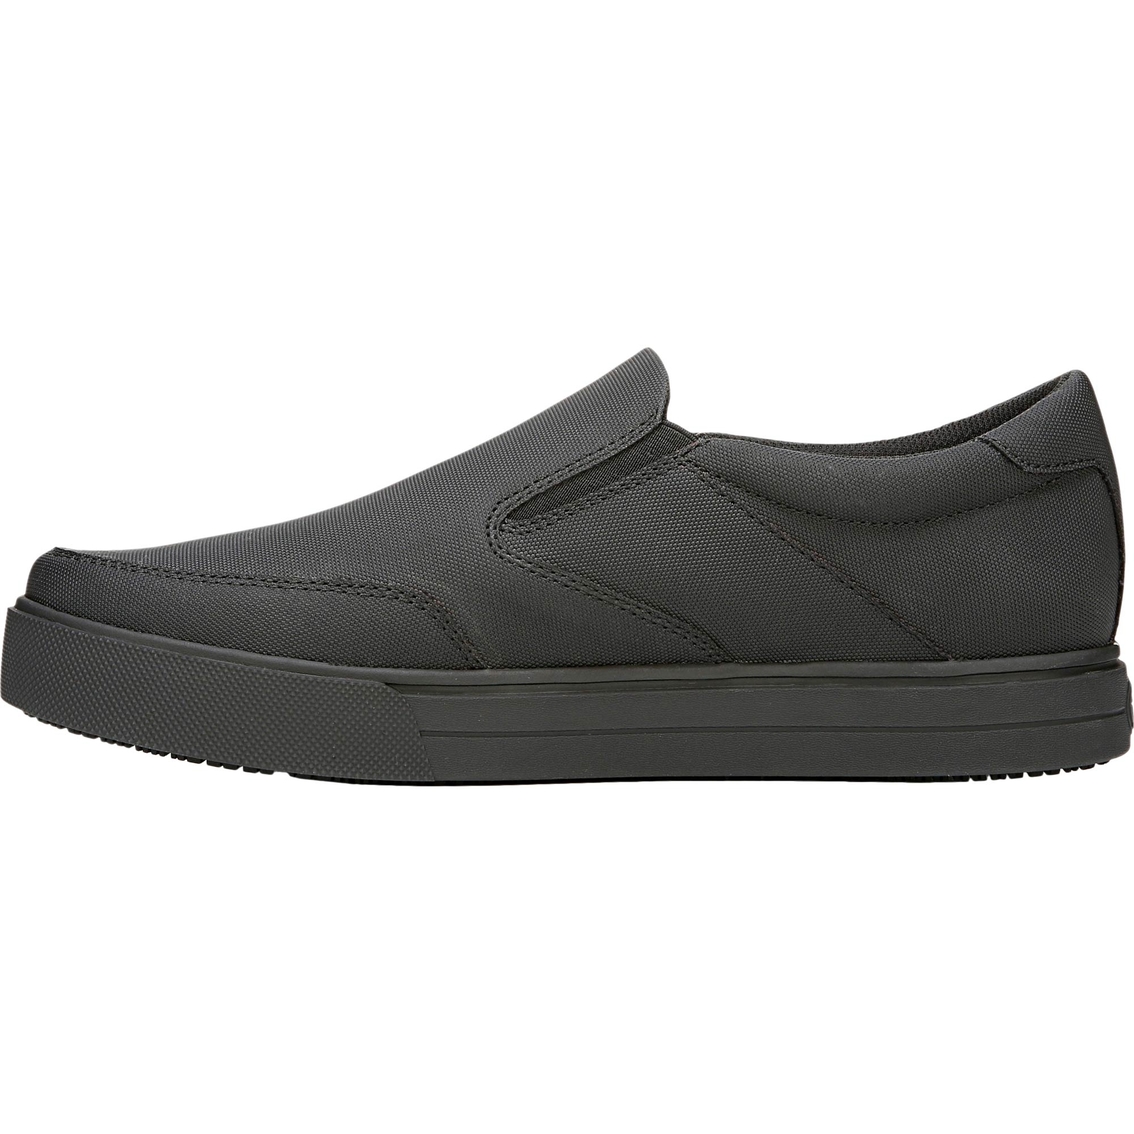 Dr. Scholl's Men's Valiant Slip On Work Shoes - Image 2 of 4